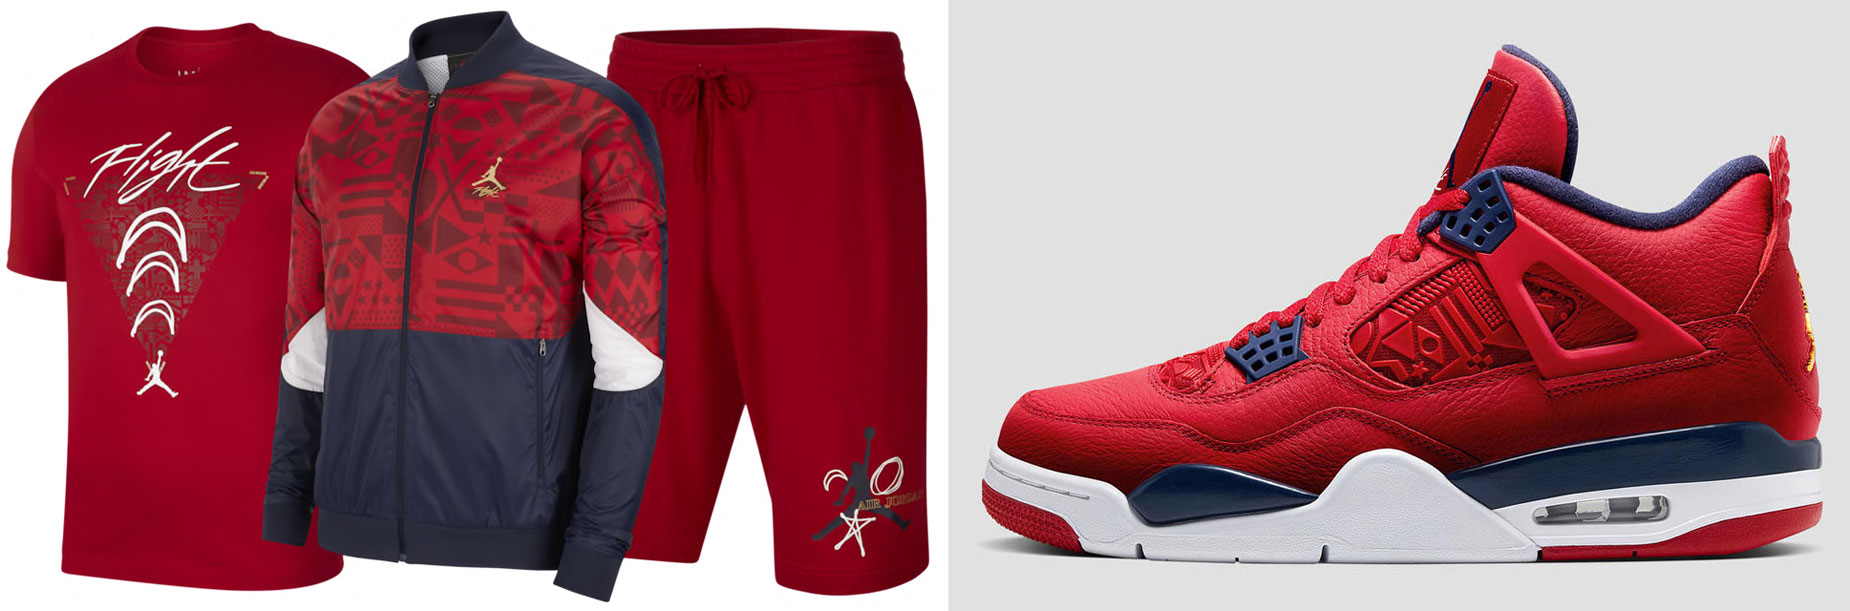 Air Jordan 4 FIBA Clothing Outfits 